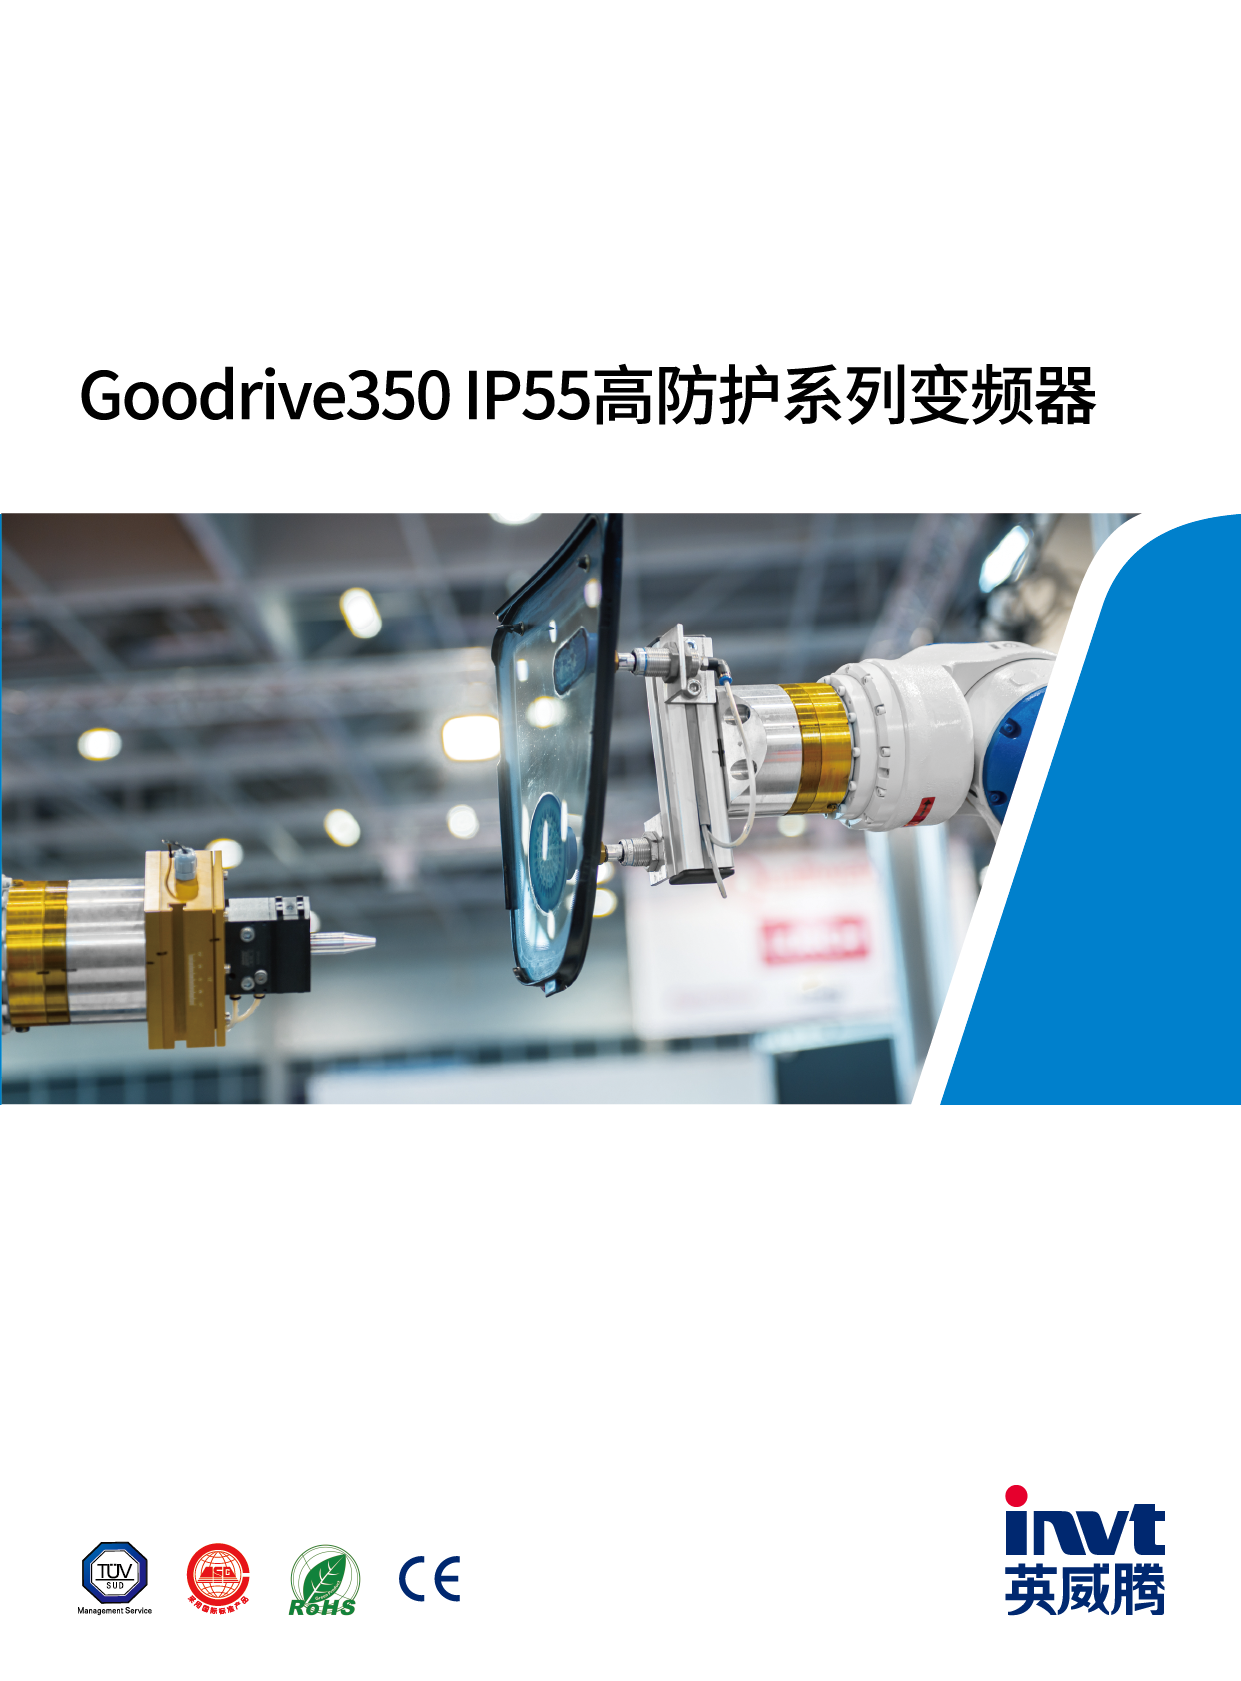 Goodrive350 IP55中文手册-01.png